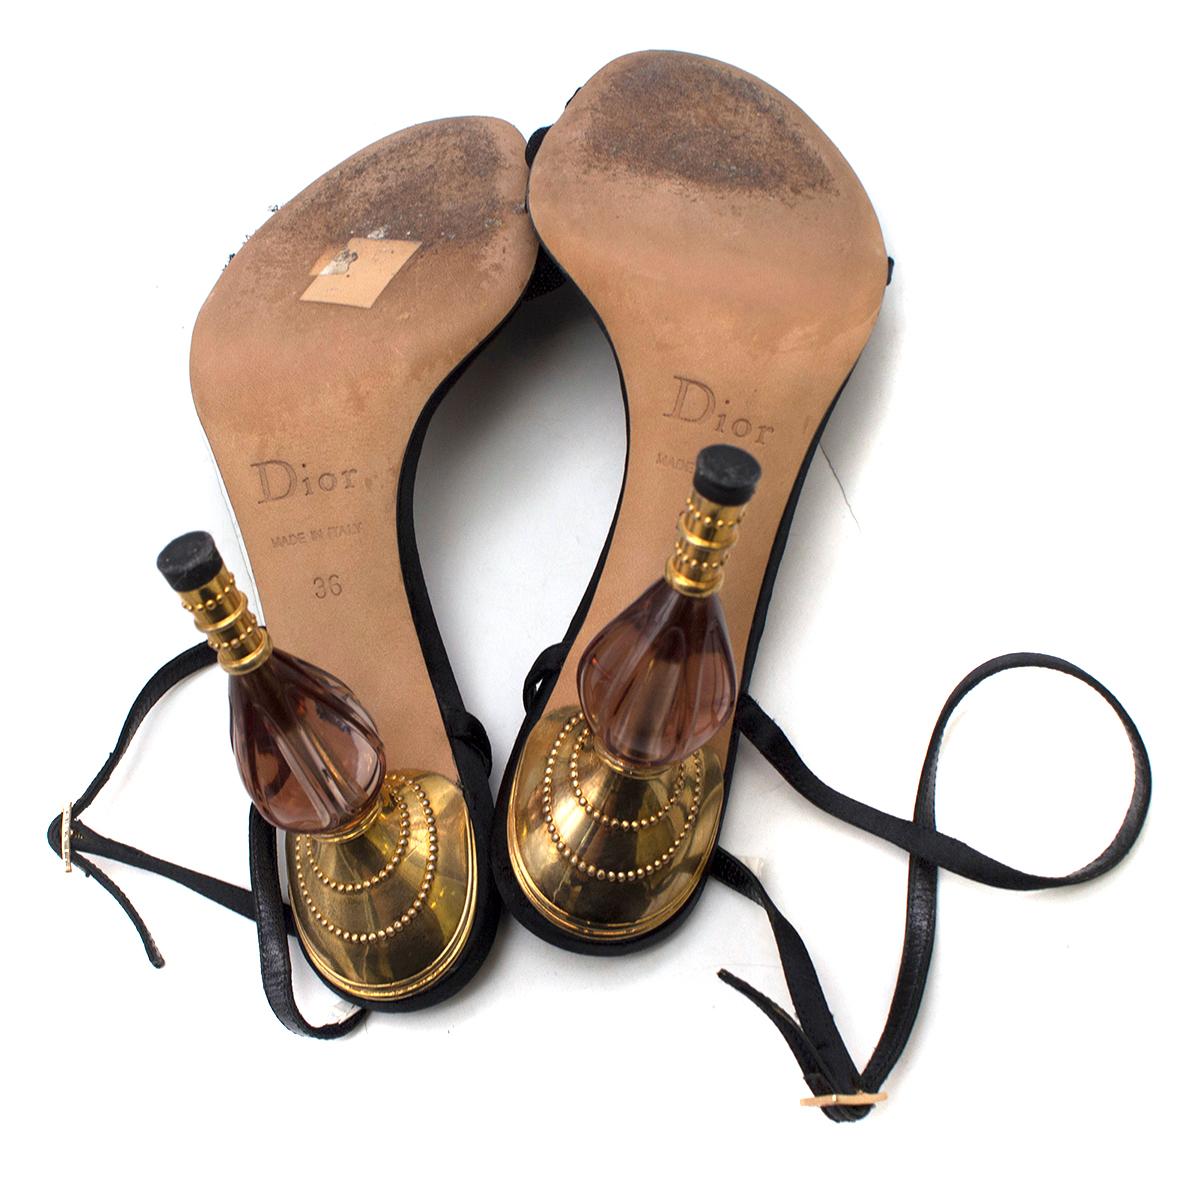 Black Dior sculpted perfume bottle heel satin sandals	SIZE 36